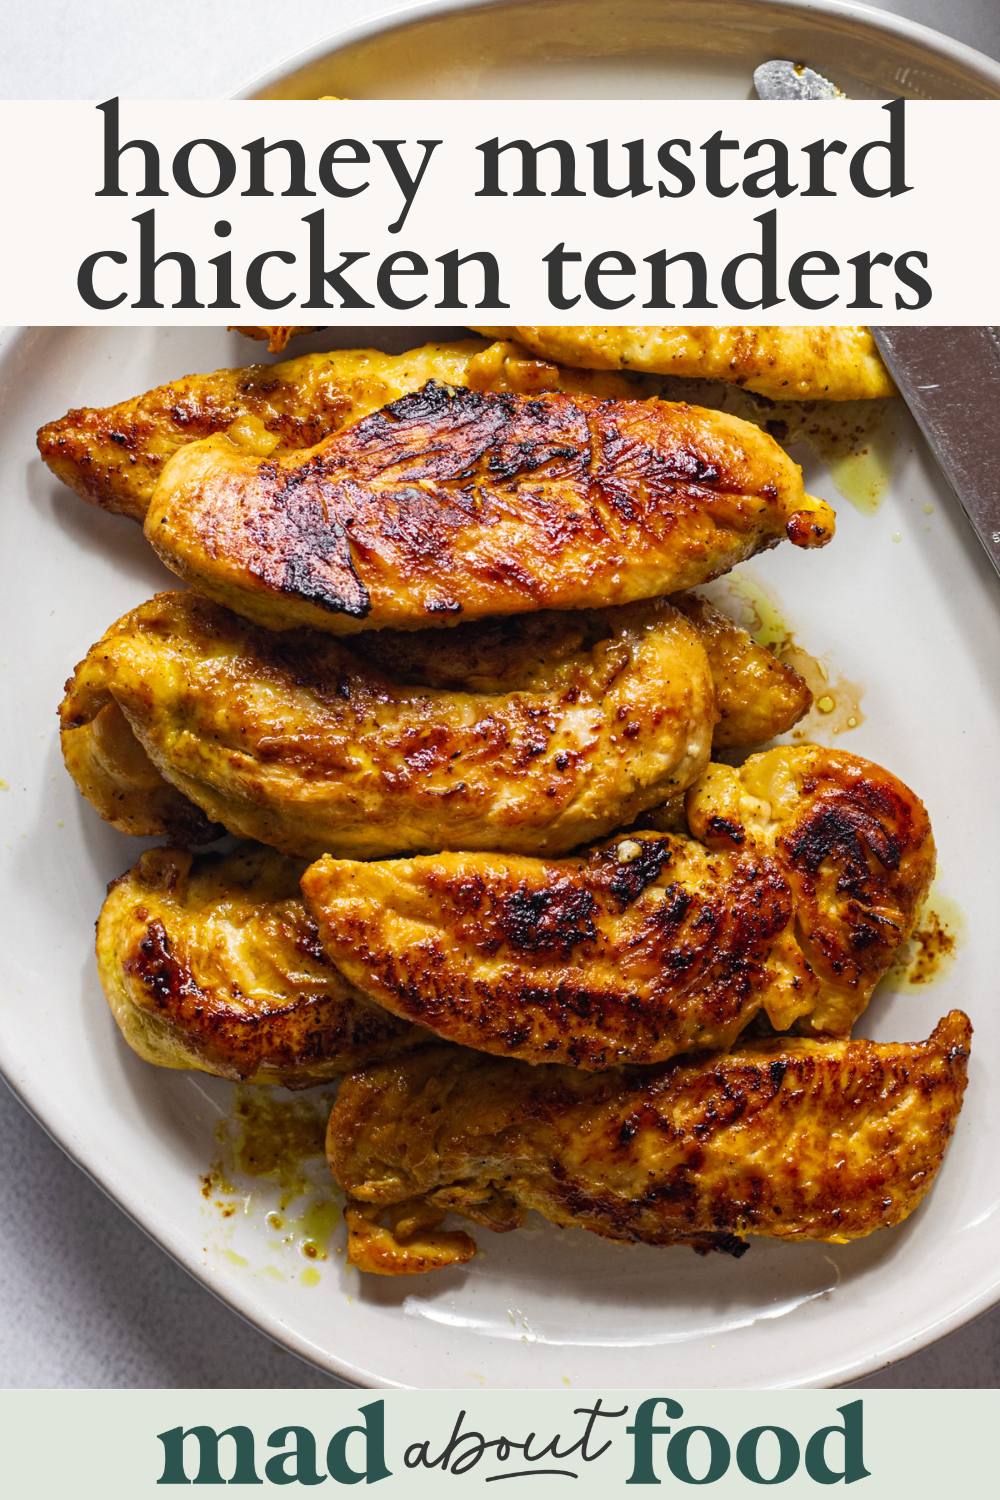 Image for pinning Honey Mustard Chicken Tenders recipe on Pinterest